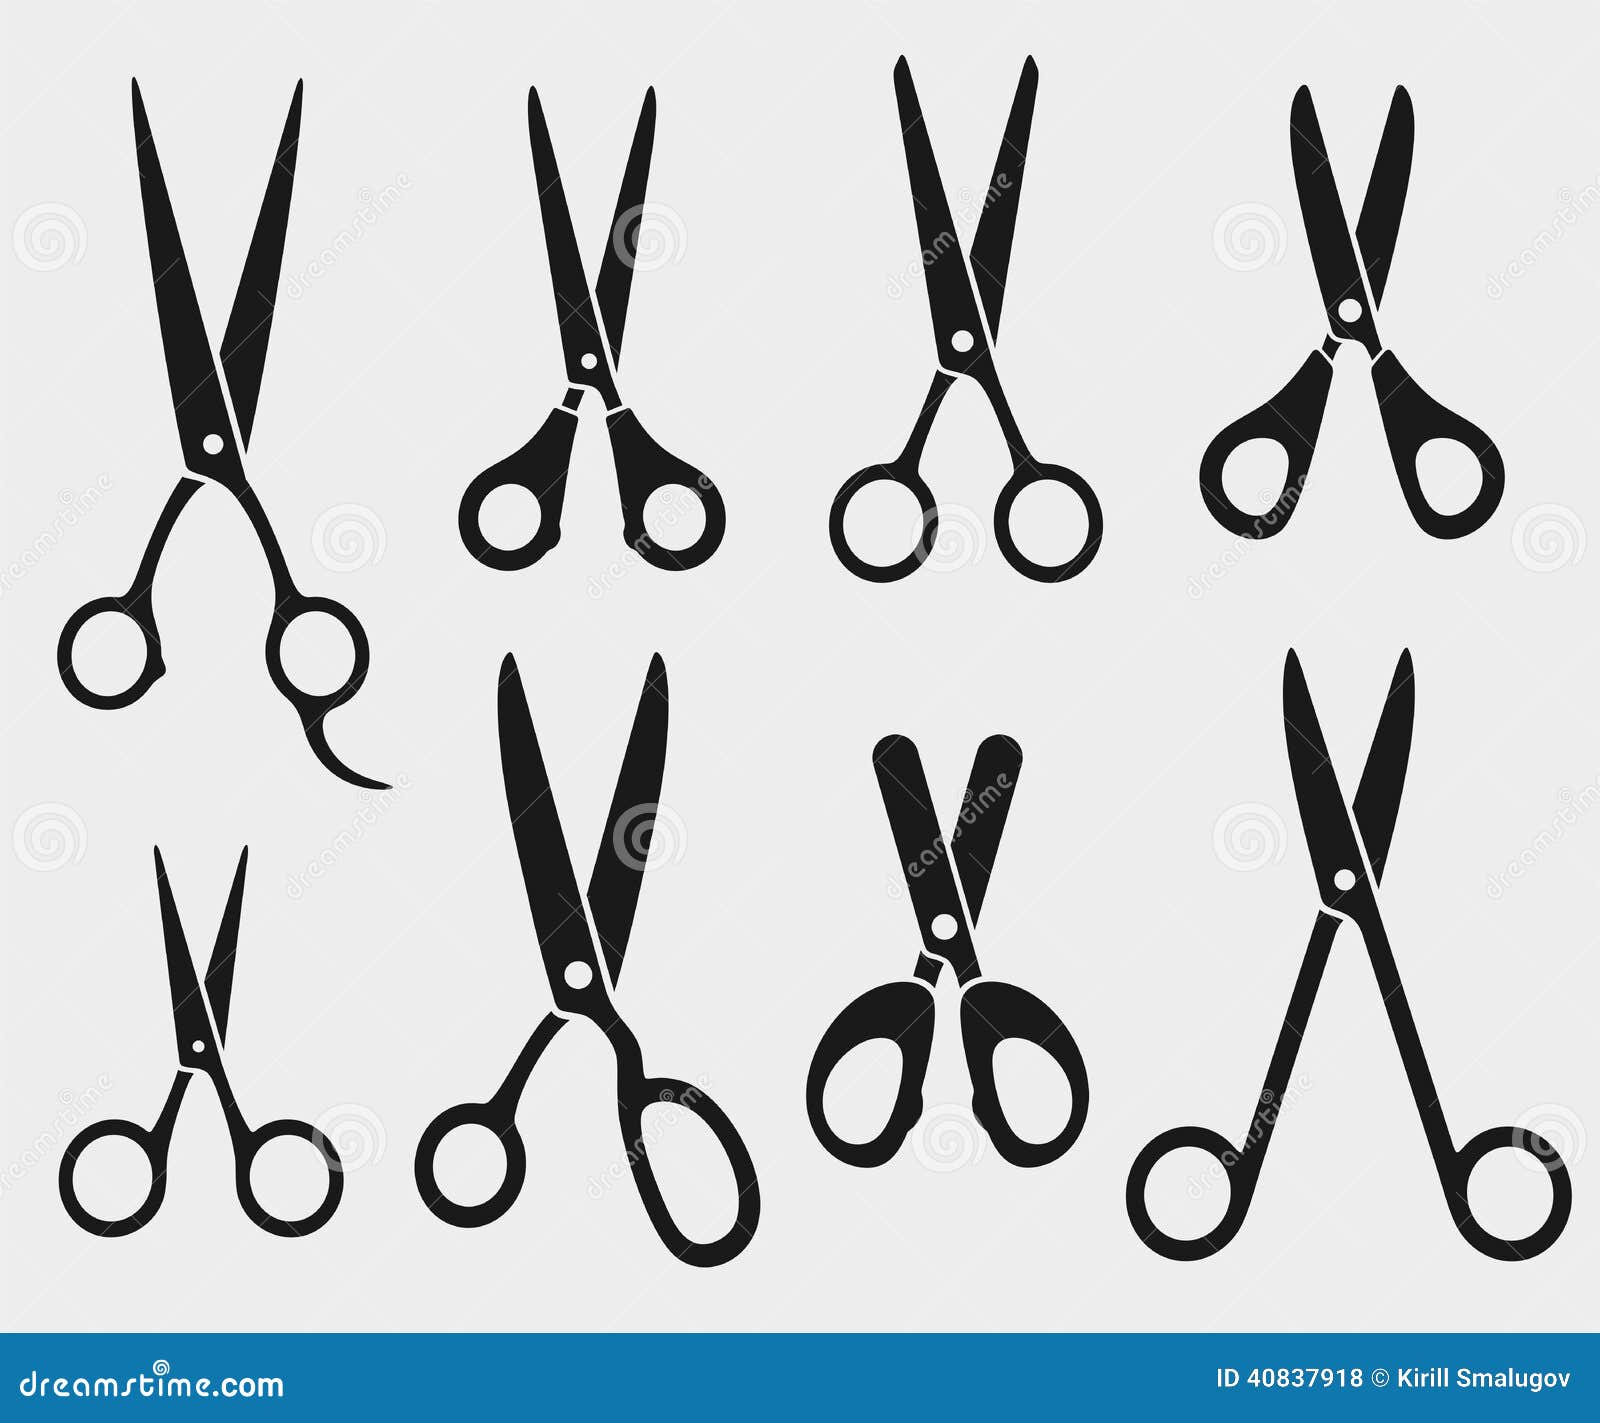 scissors set. 